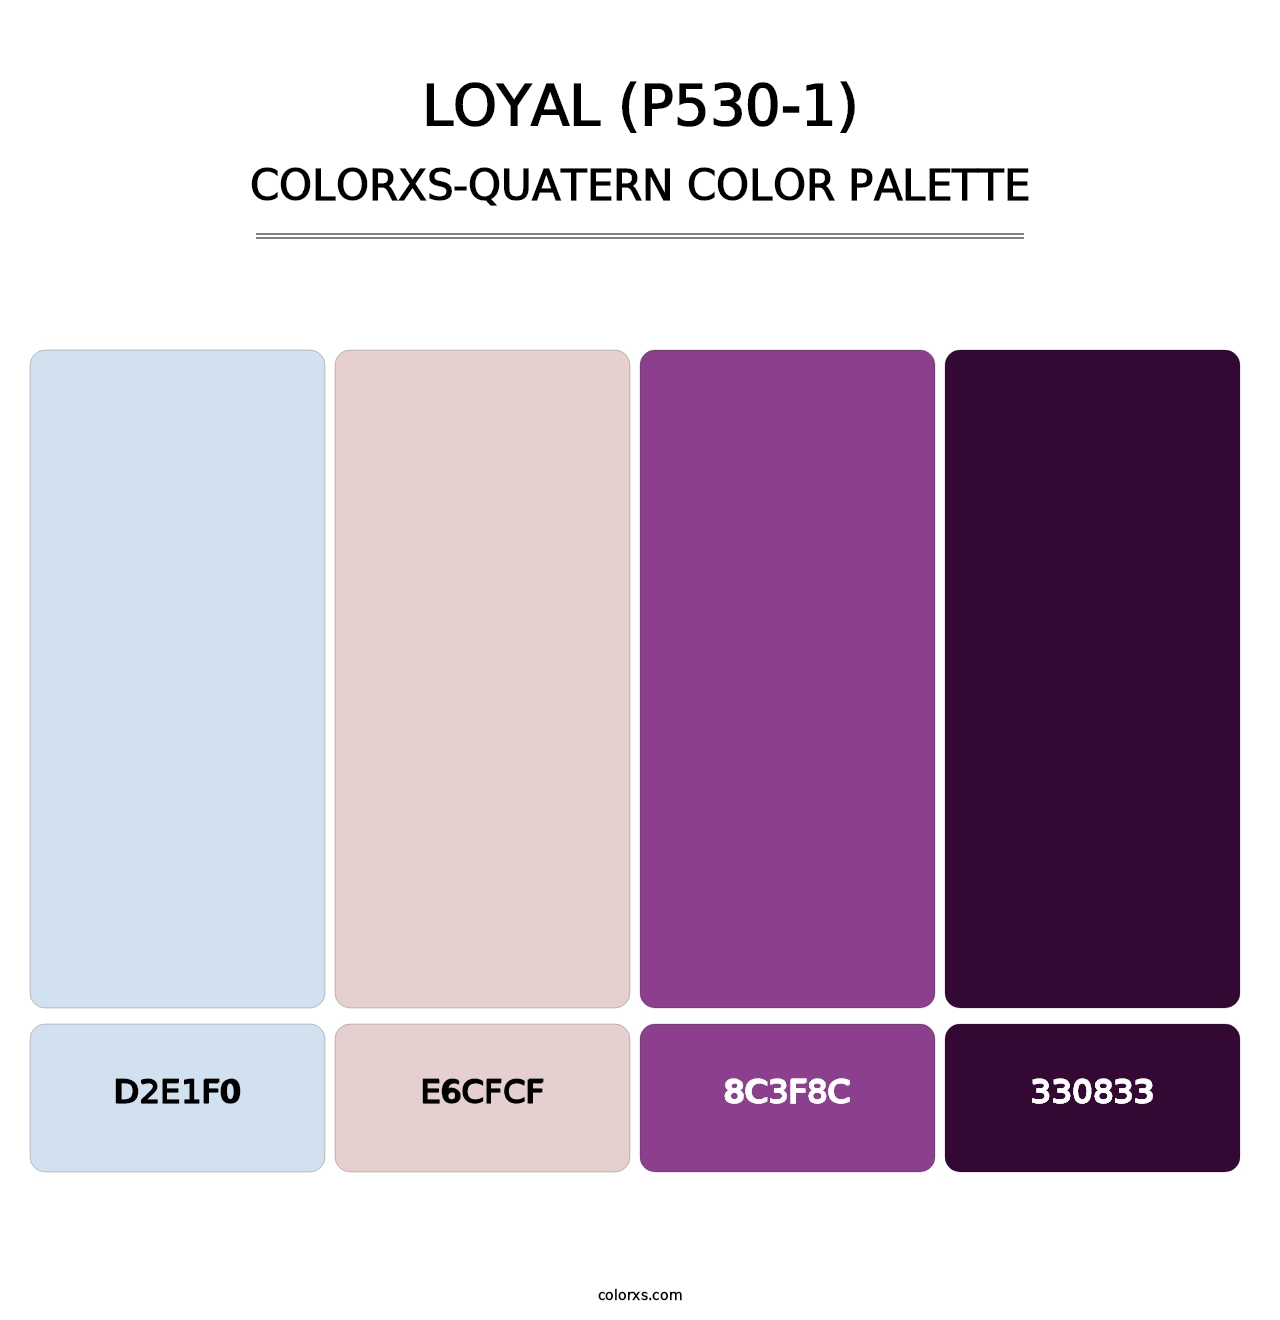 Loyal (P530-1) - Colorxs Quatern Palette